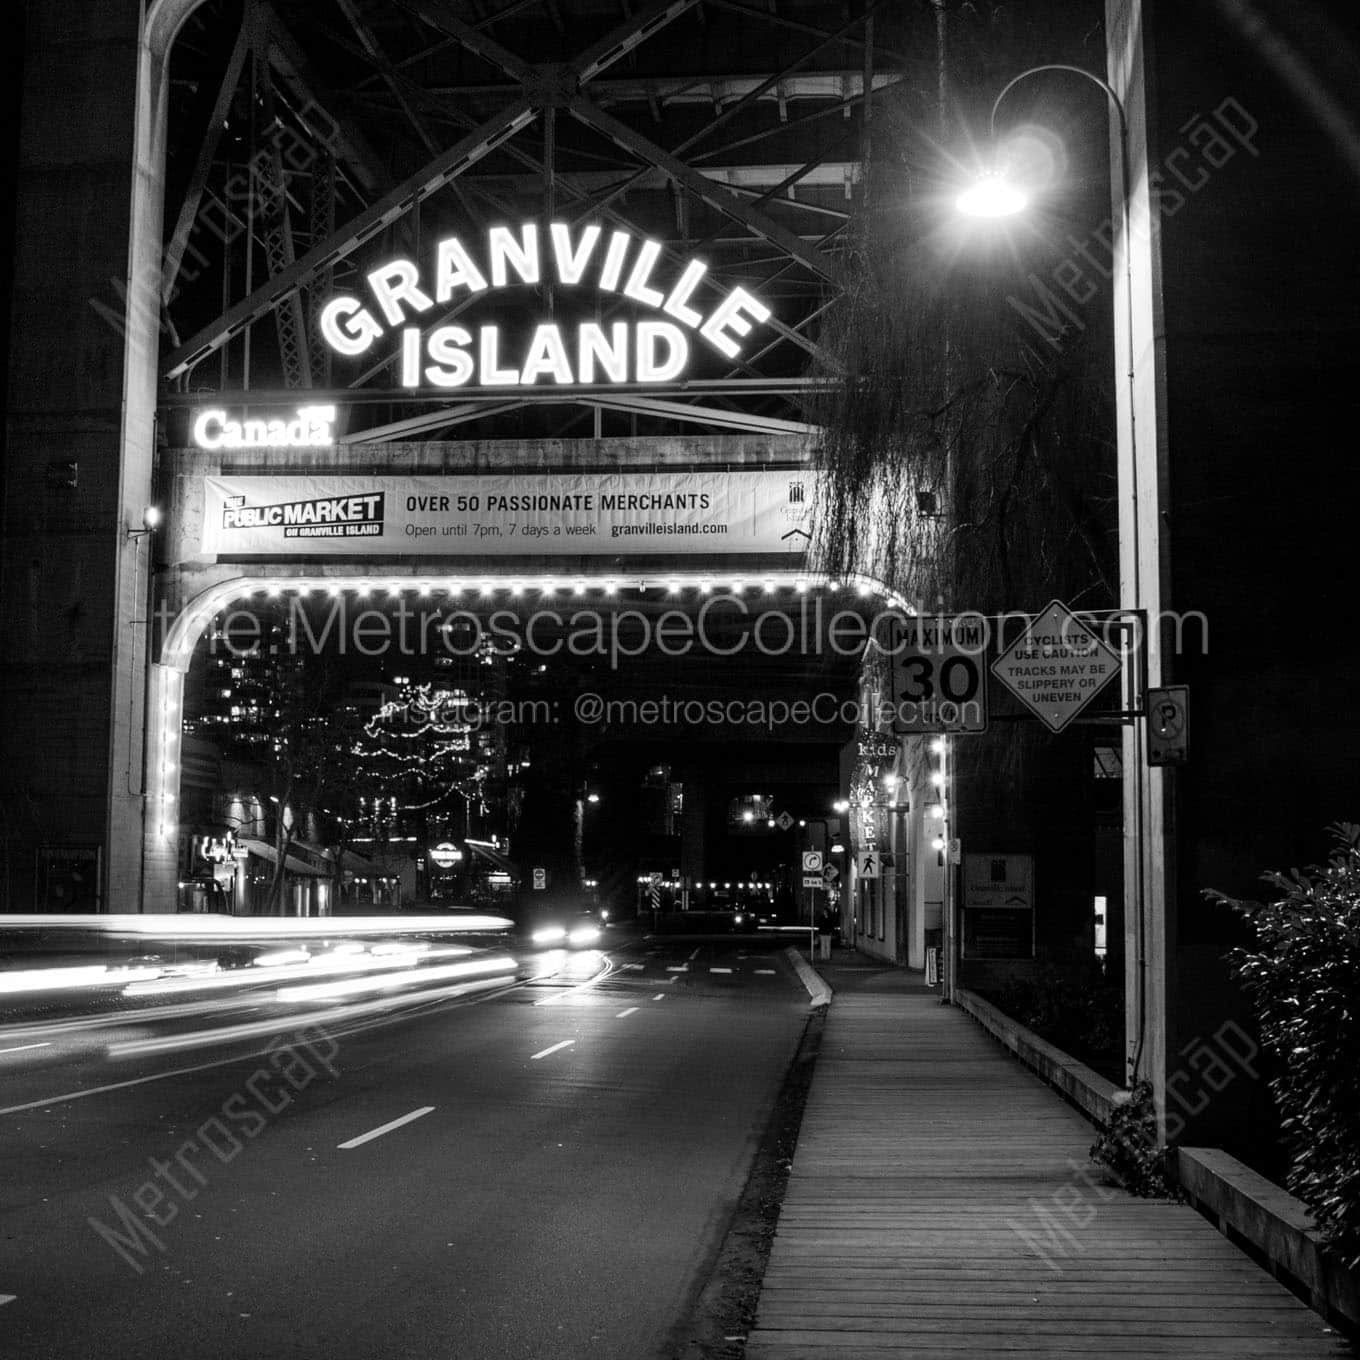 granville island sign at night Black & White Wall Art